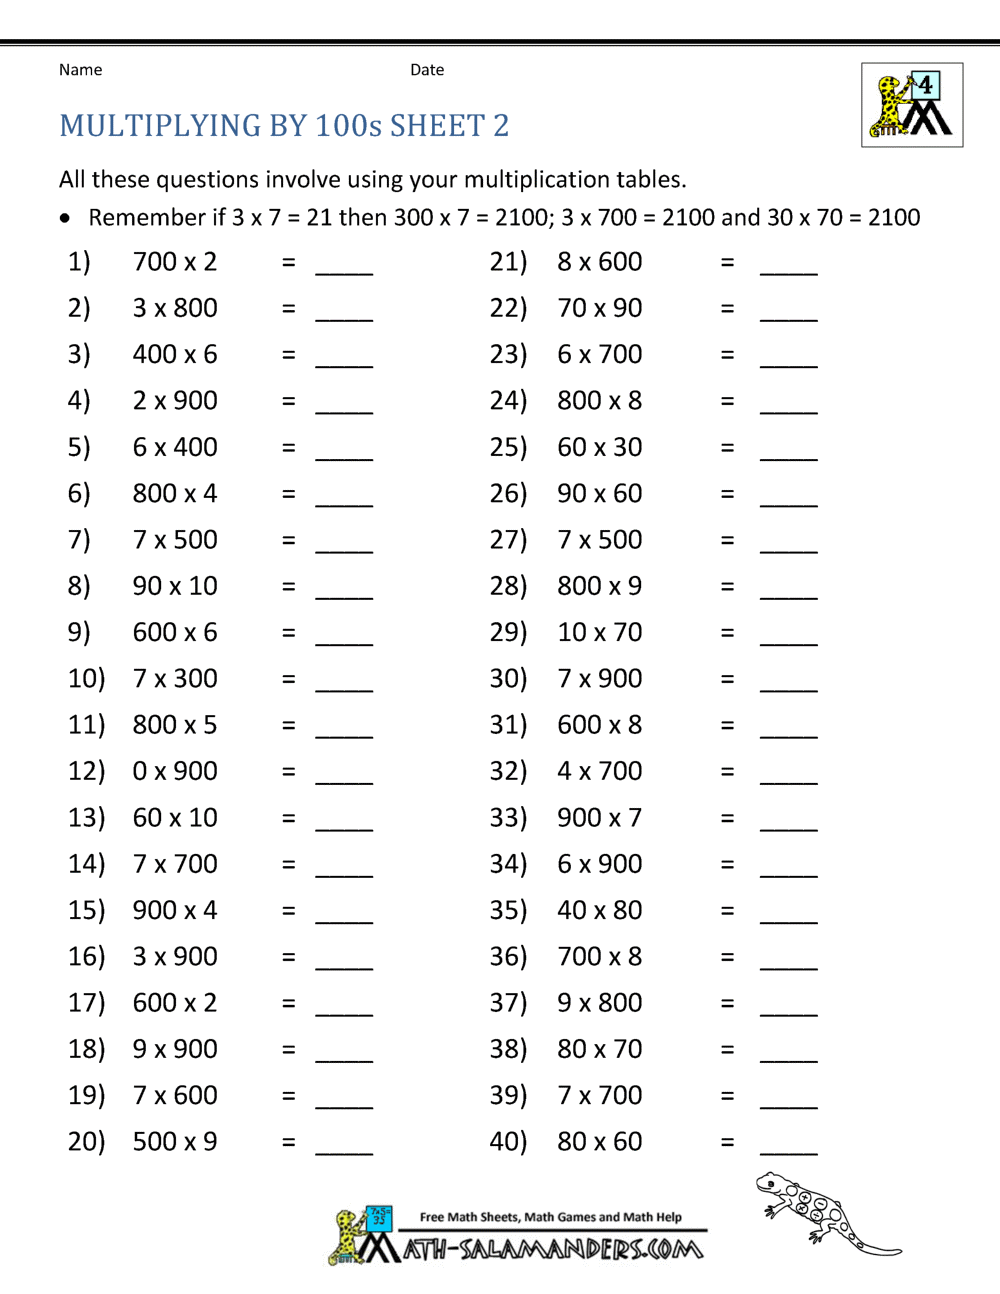 Multiplication Fact Sheets